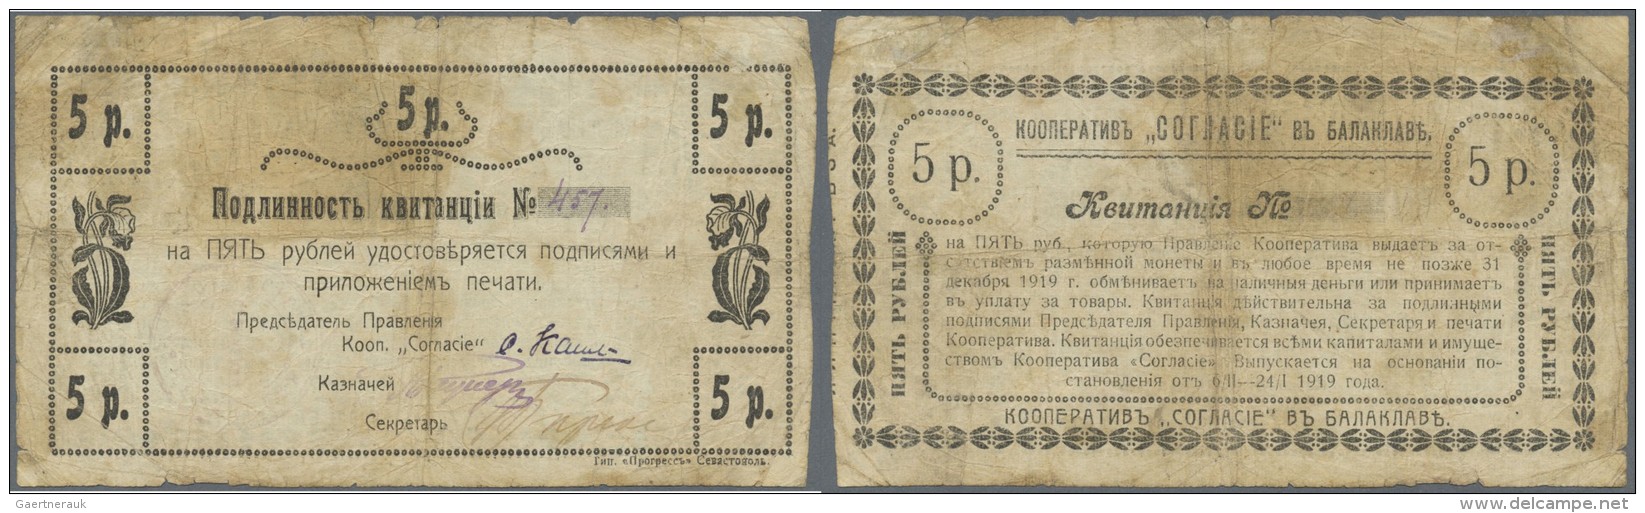 Ukraina / Ukraine: Balaklava Crimea 5 Rubles 1919 Cooperative "Soglasie", P.NL (R 13454), Well Worn Condition With Yello - Ukraine